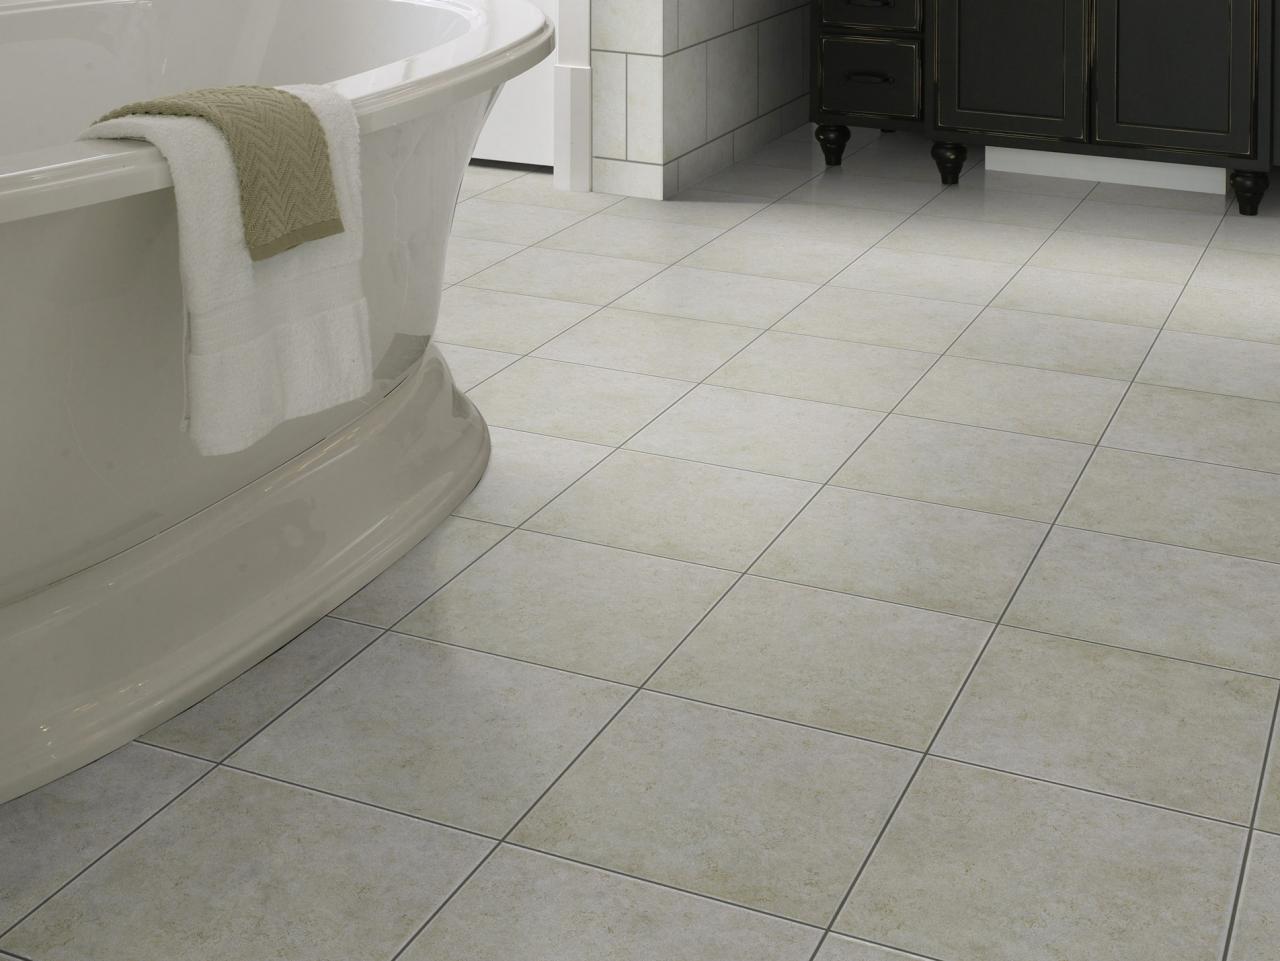 Why Homeowners Love Ceramic Tile, Ceramic Or Porcelain Tile For Bathroom Floor